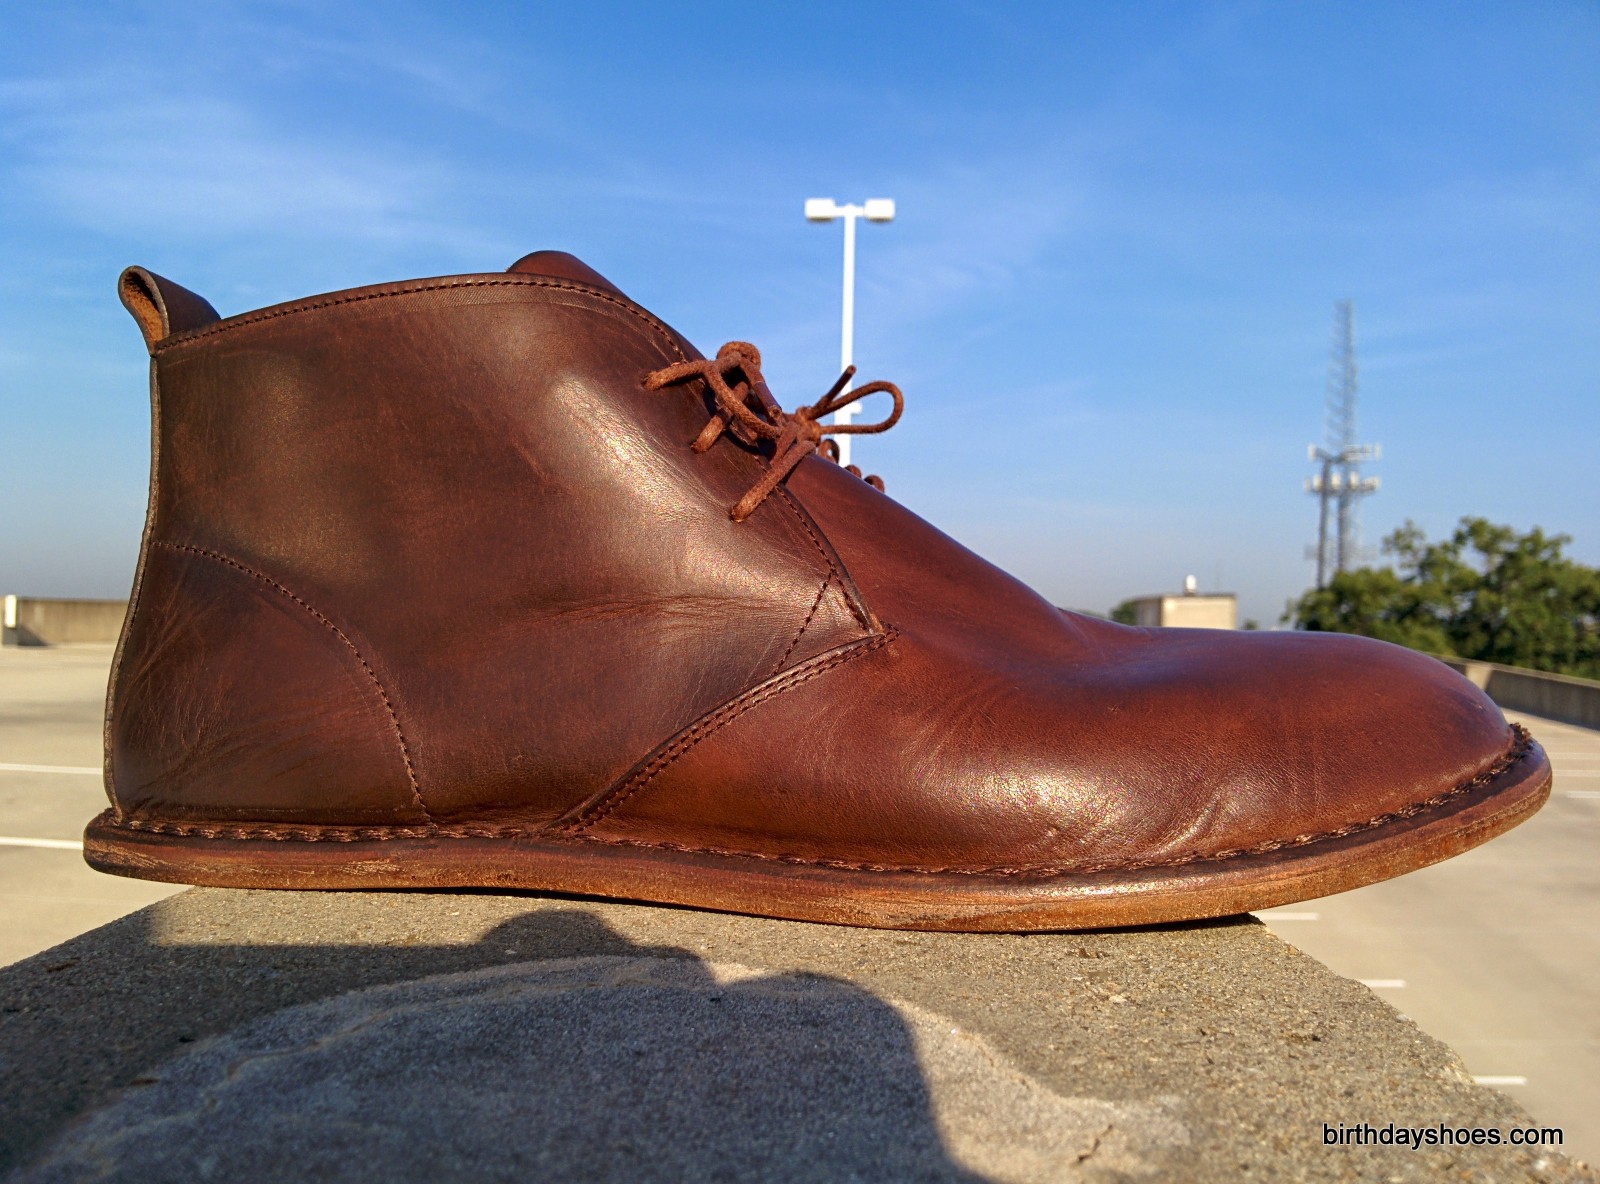 The Porto has the desert boot cut that is similar to Vivo's Gobi shoe.